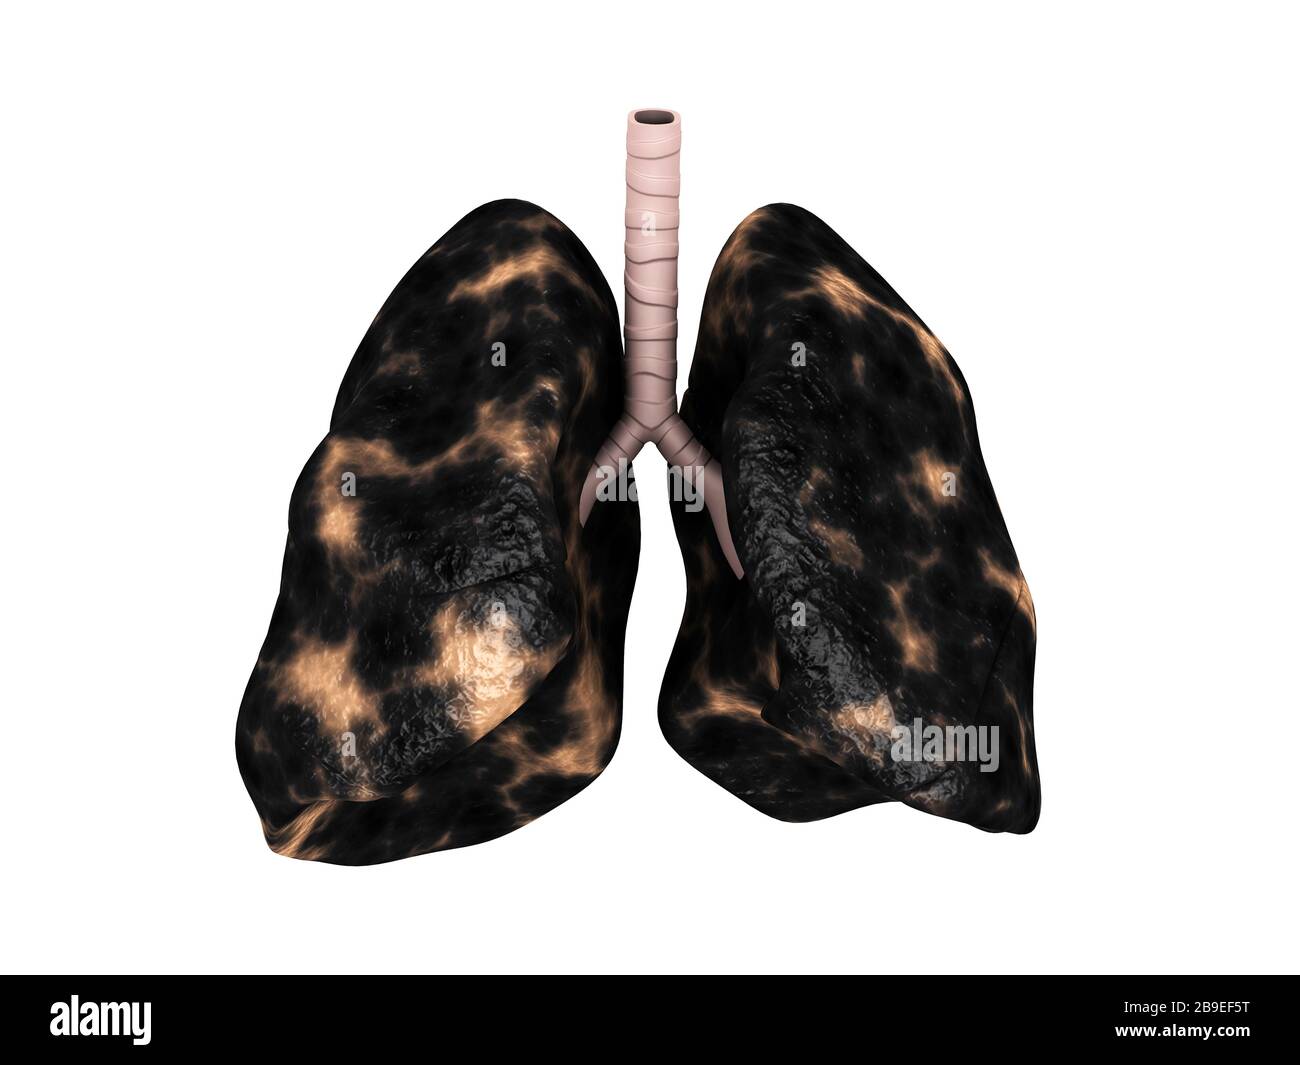 Smoker lungs illustration. Stock Photo